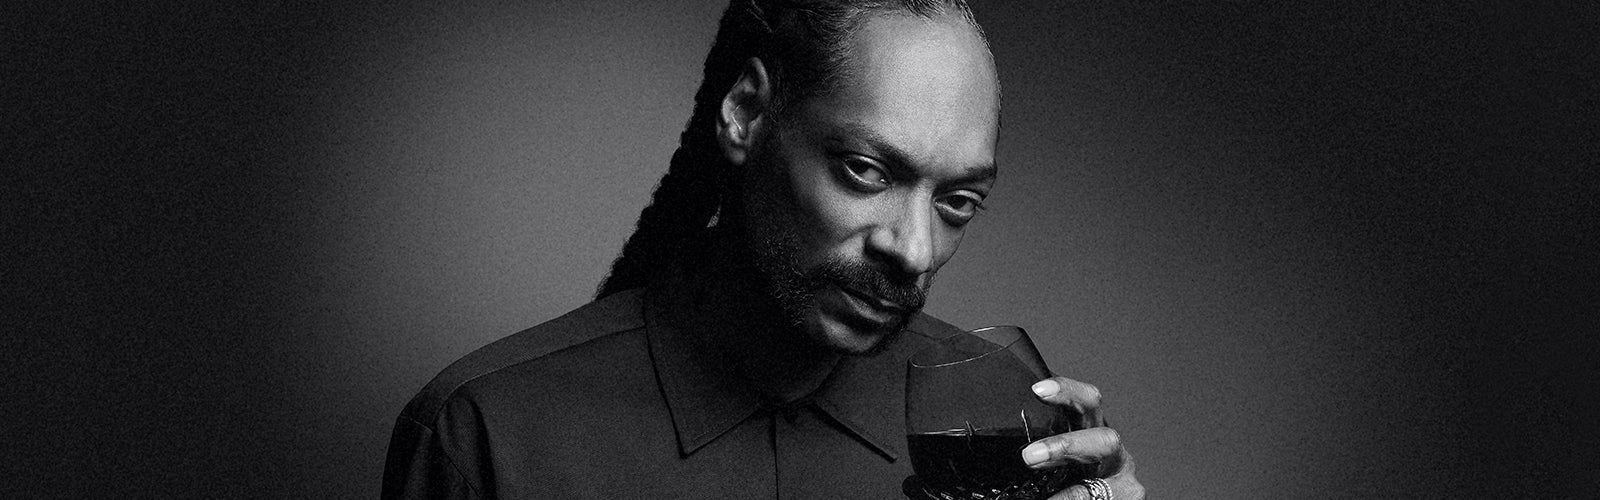 Snoop Dogg enjoying Cali Red